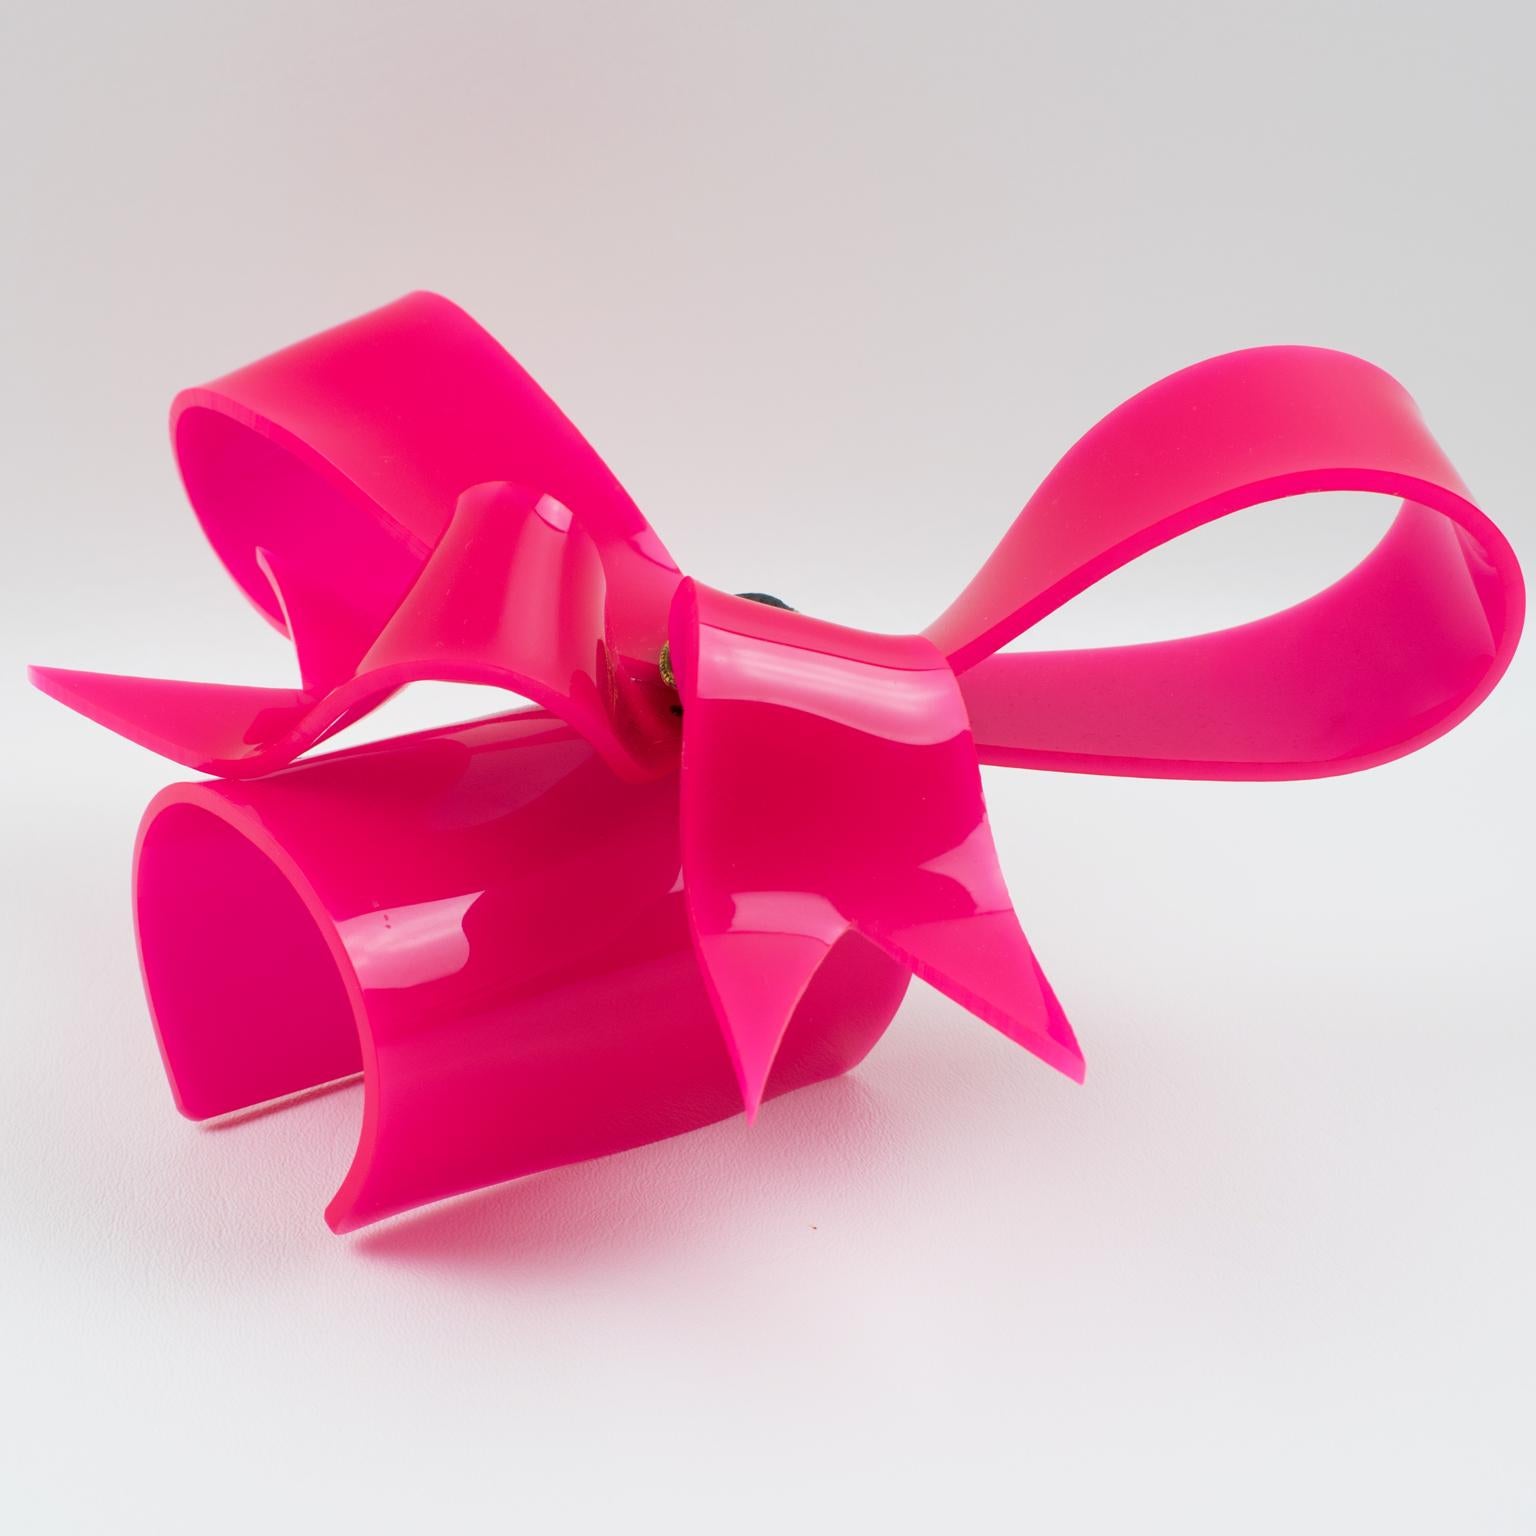 Women's or Men's Vivienne Westwood Prototype Cuff Bangle Bracelet Pink Acrylic Bow